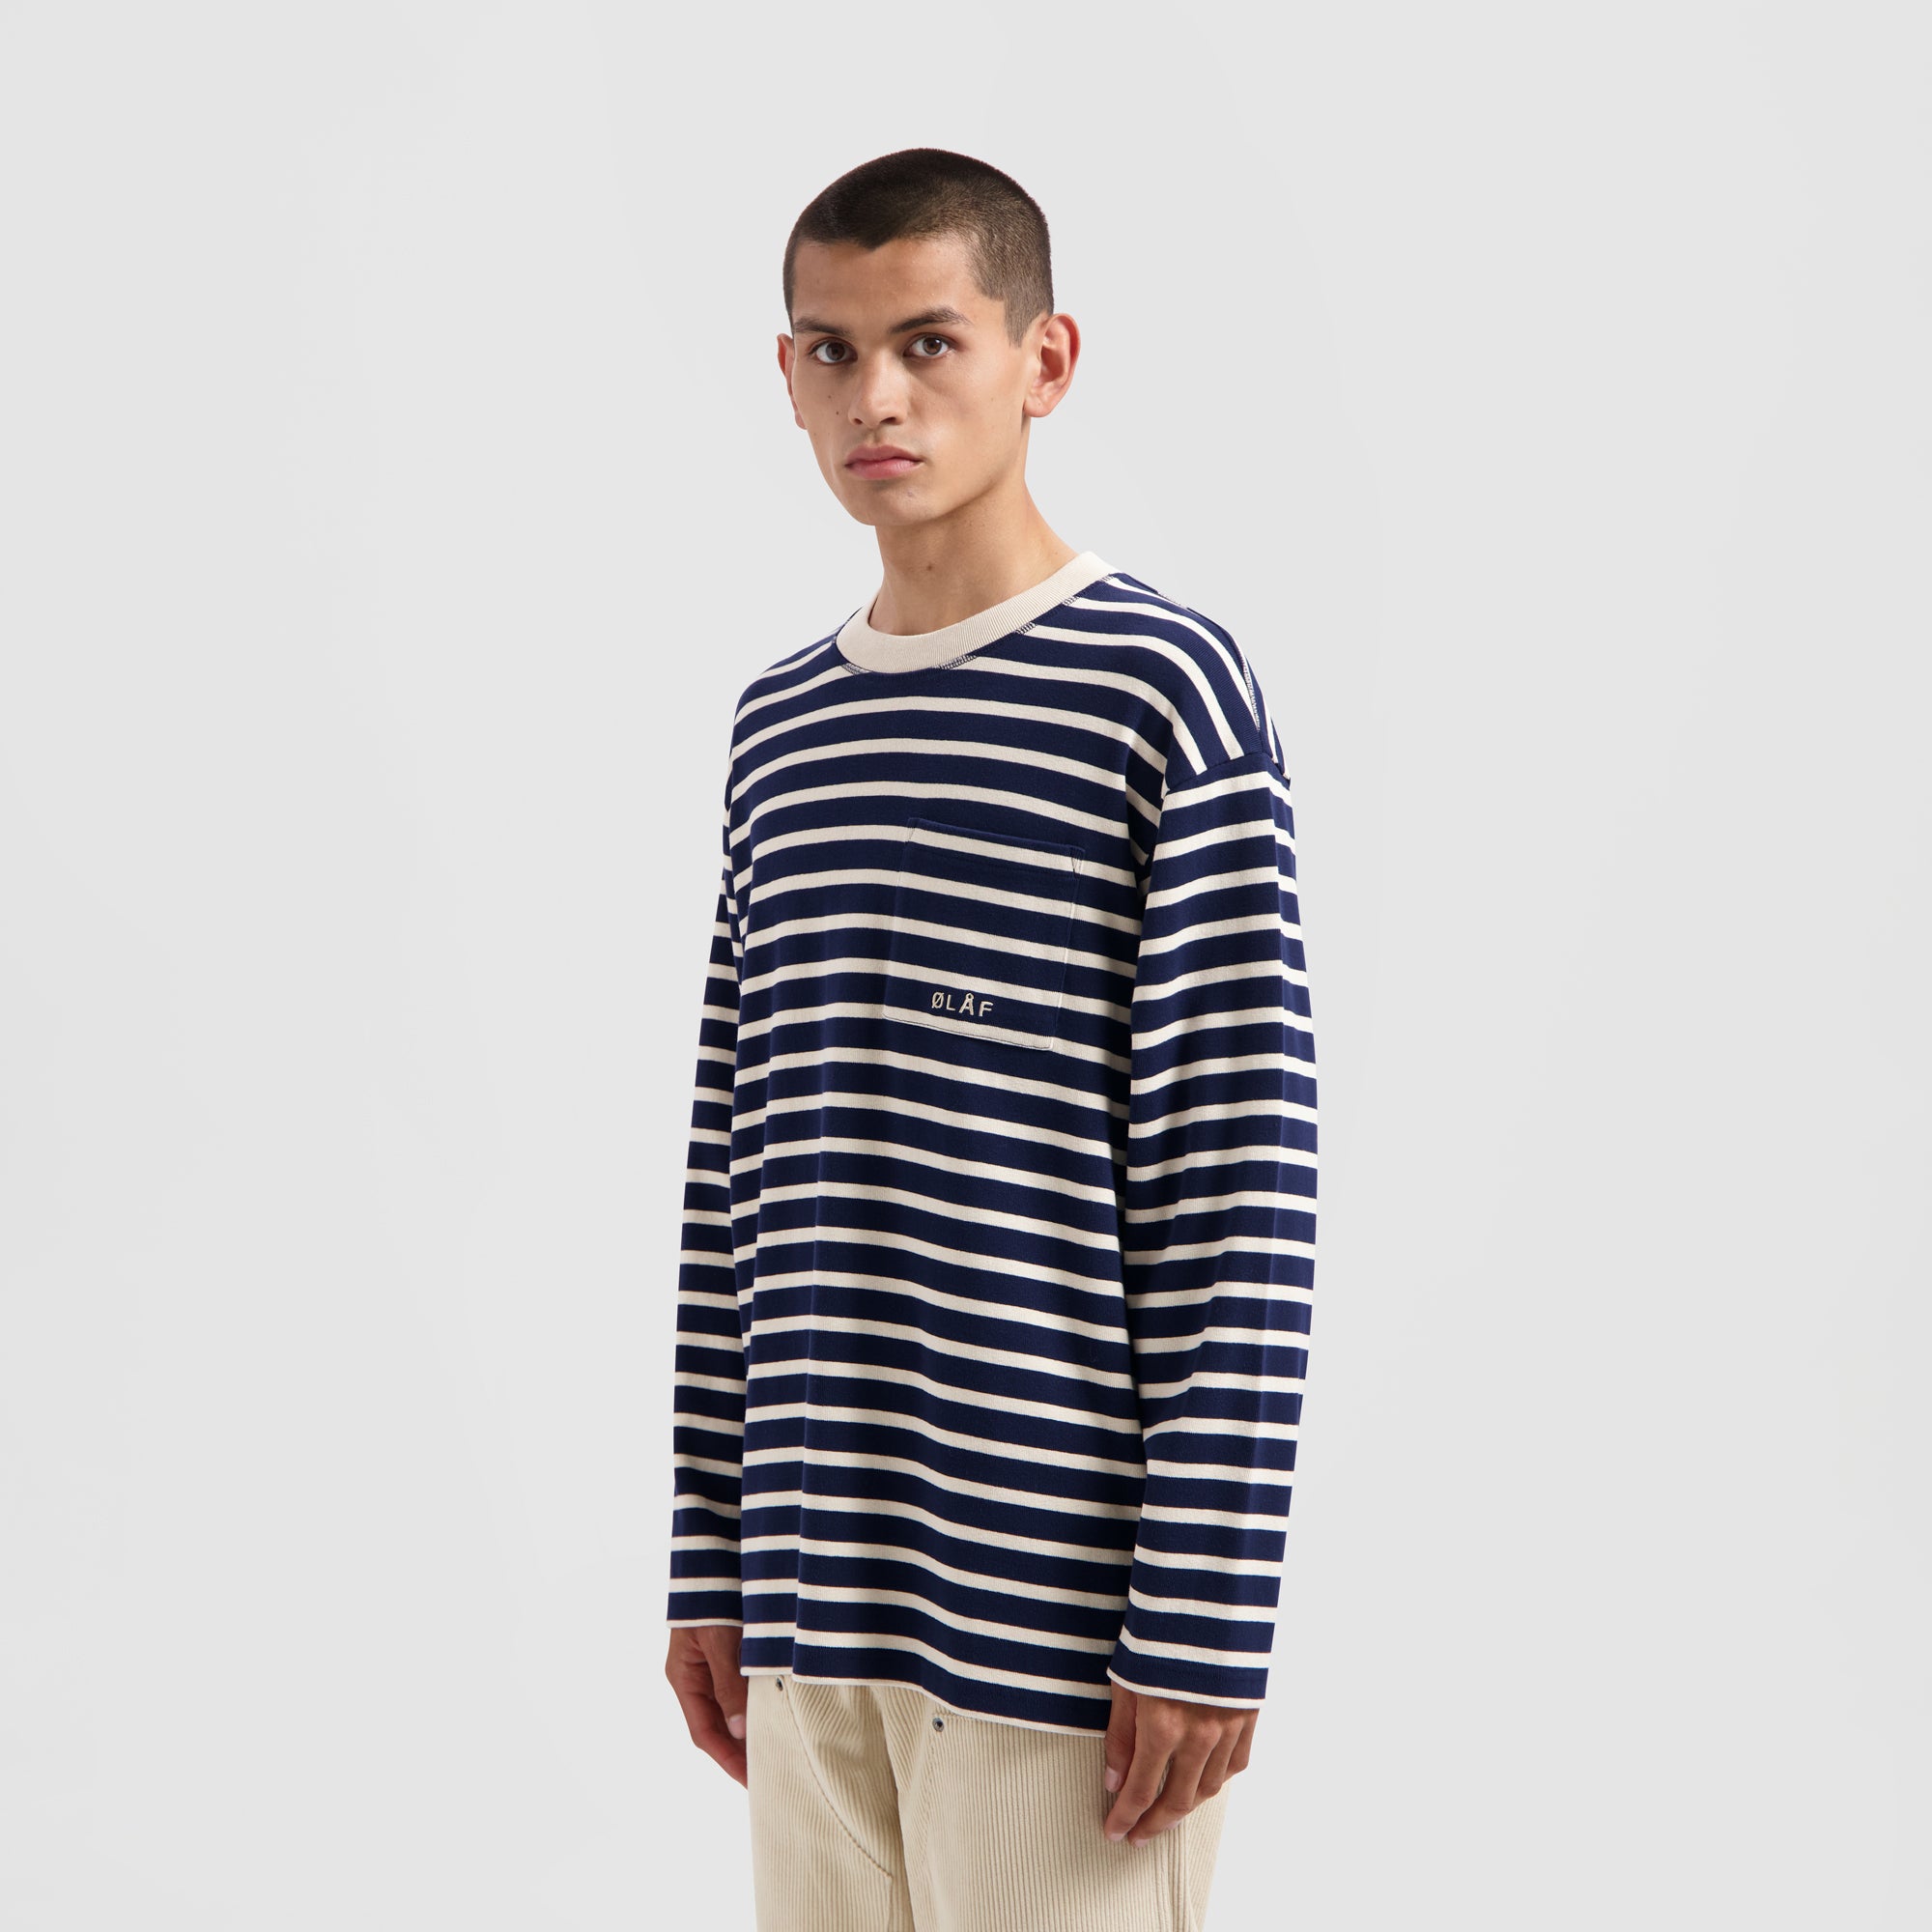 Stripe Sweatshirt - Navy / Off White